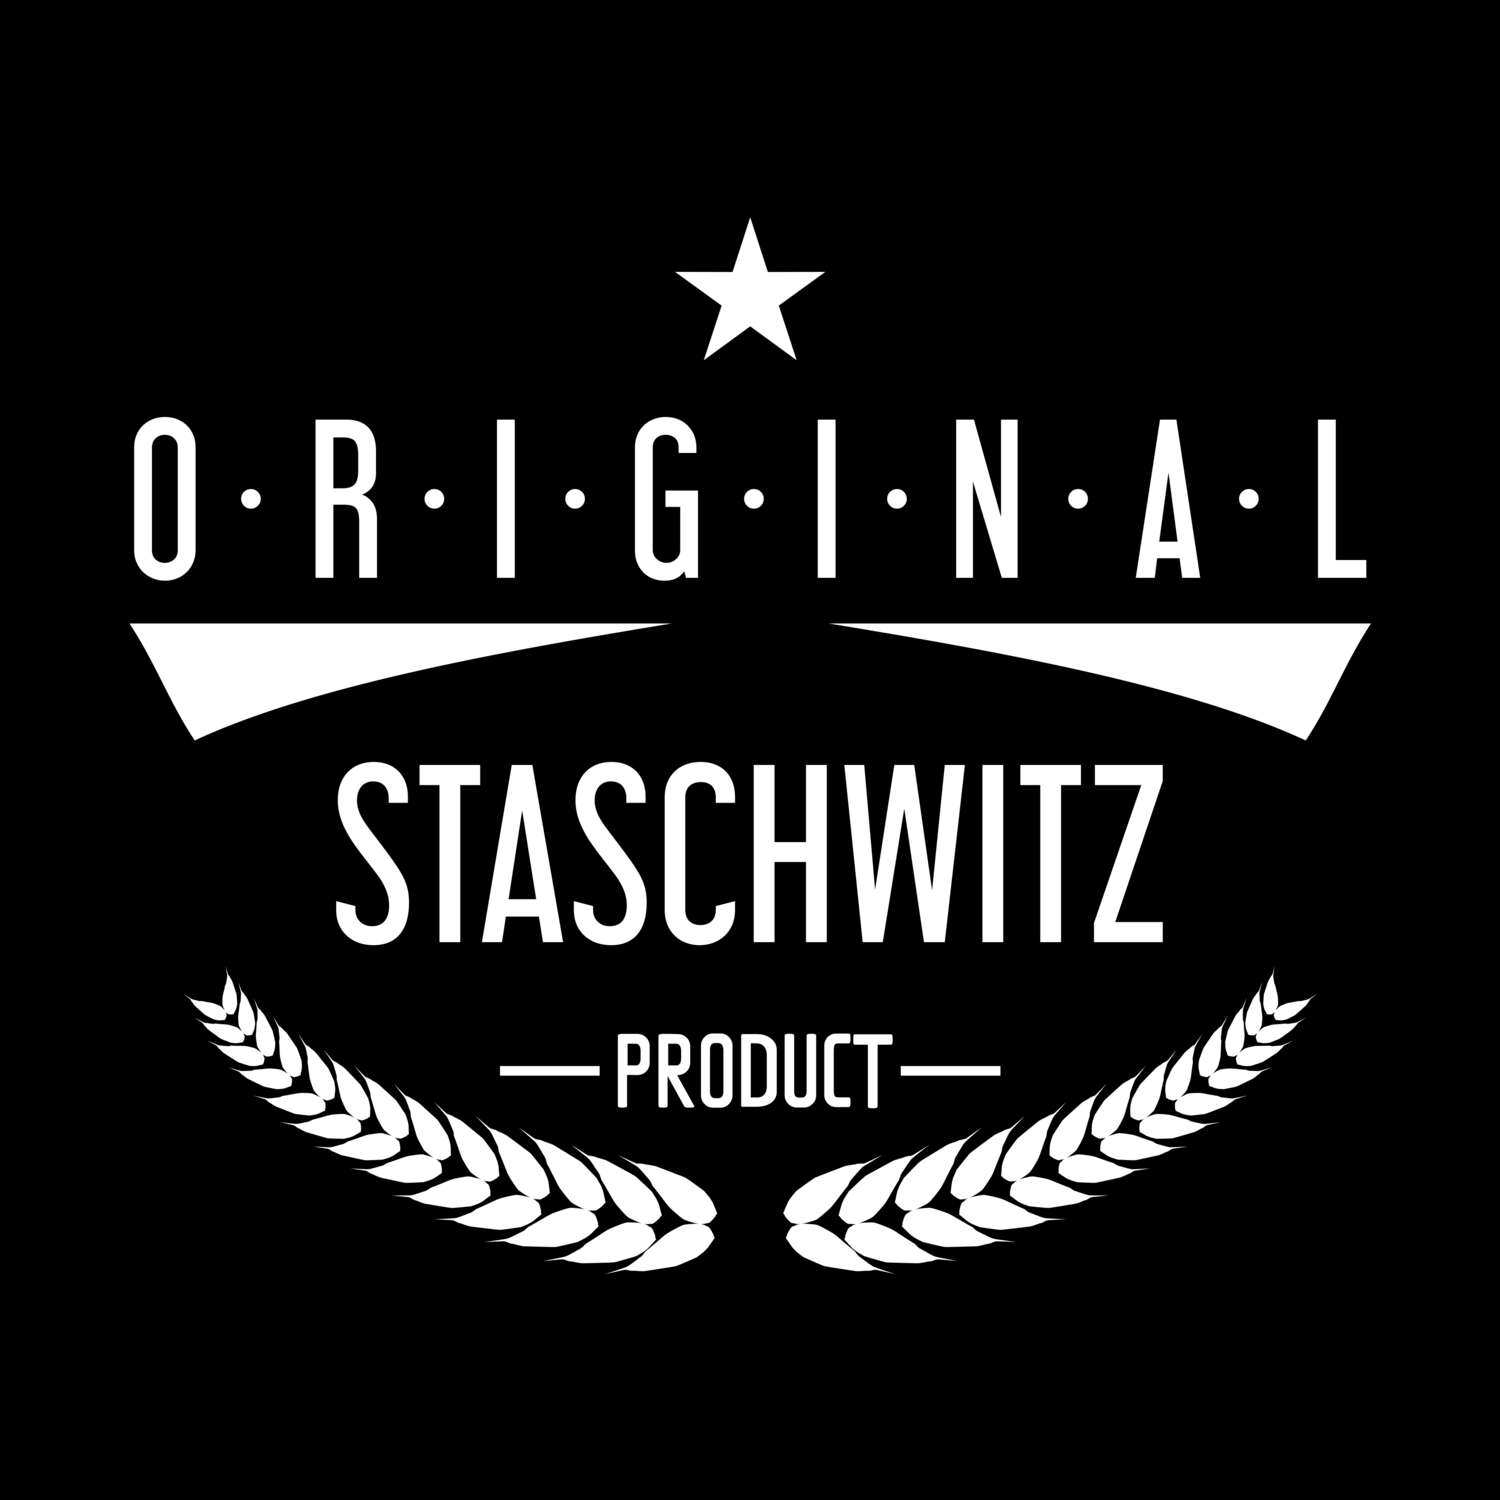 Staschwitz T-Shirt »Original Product«